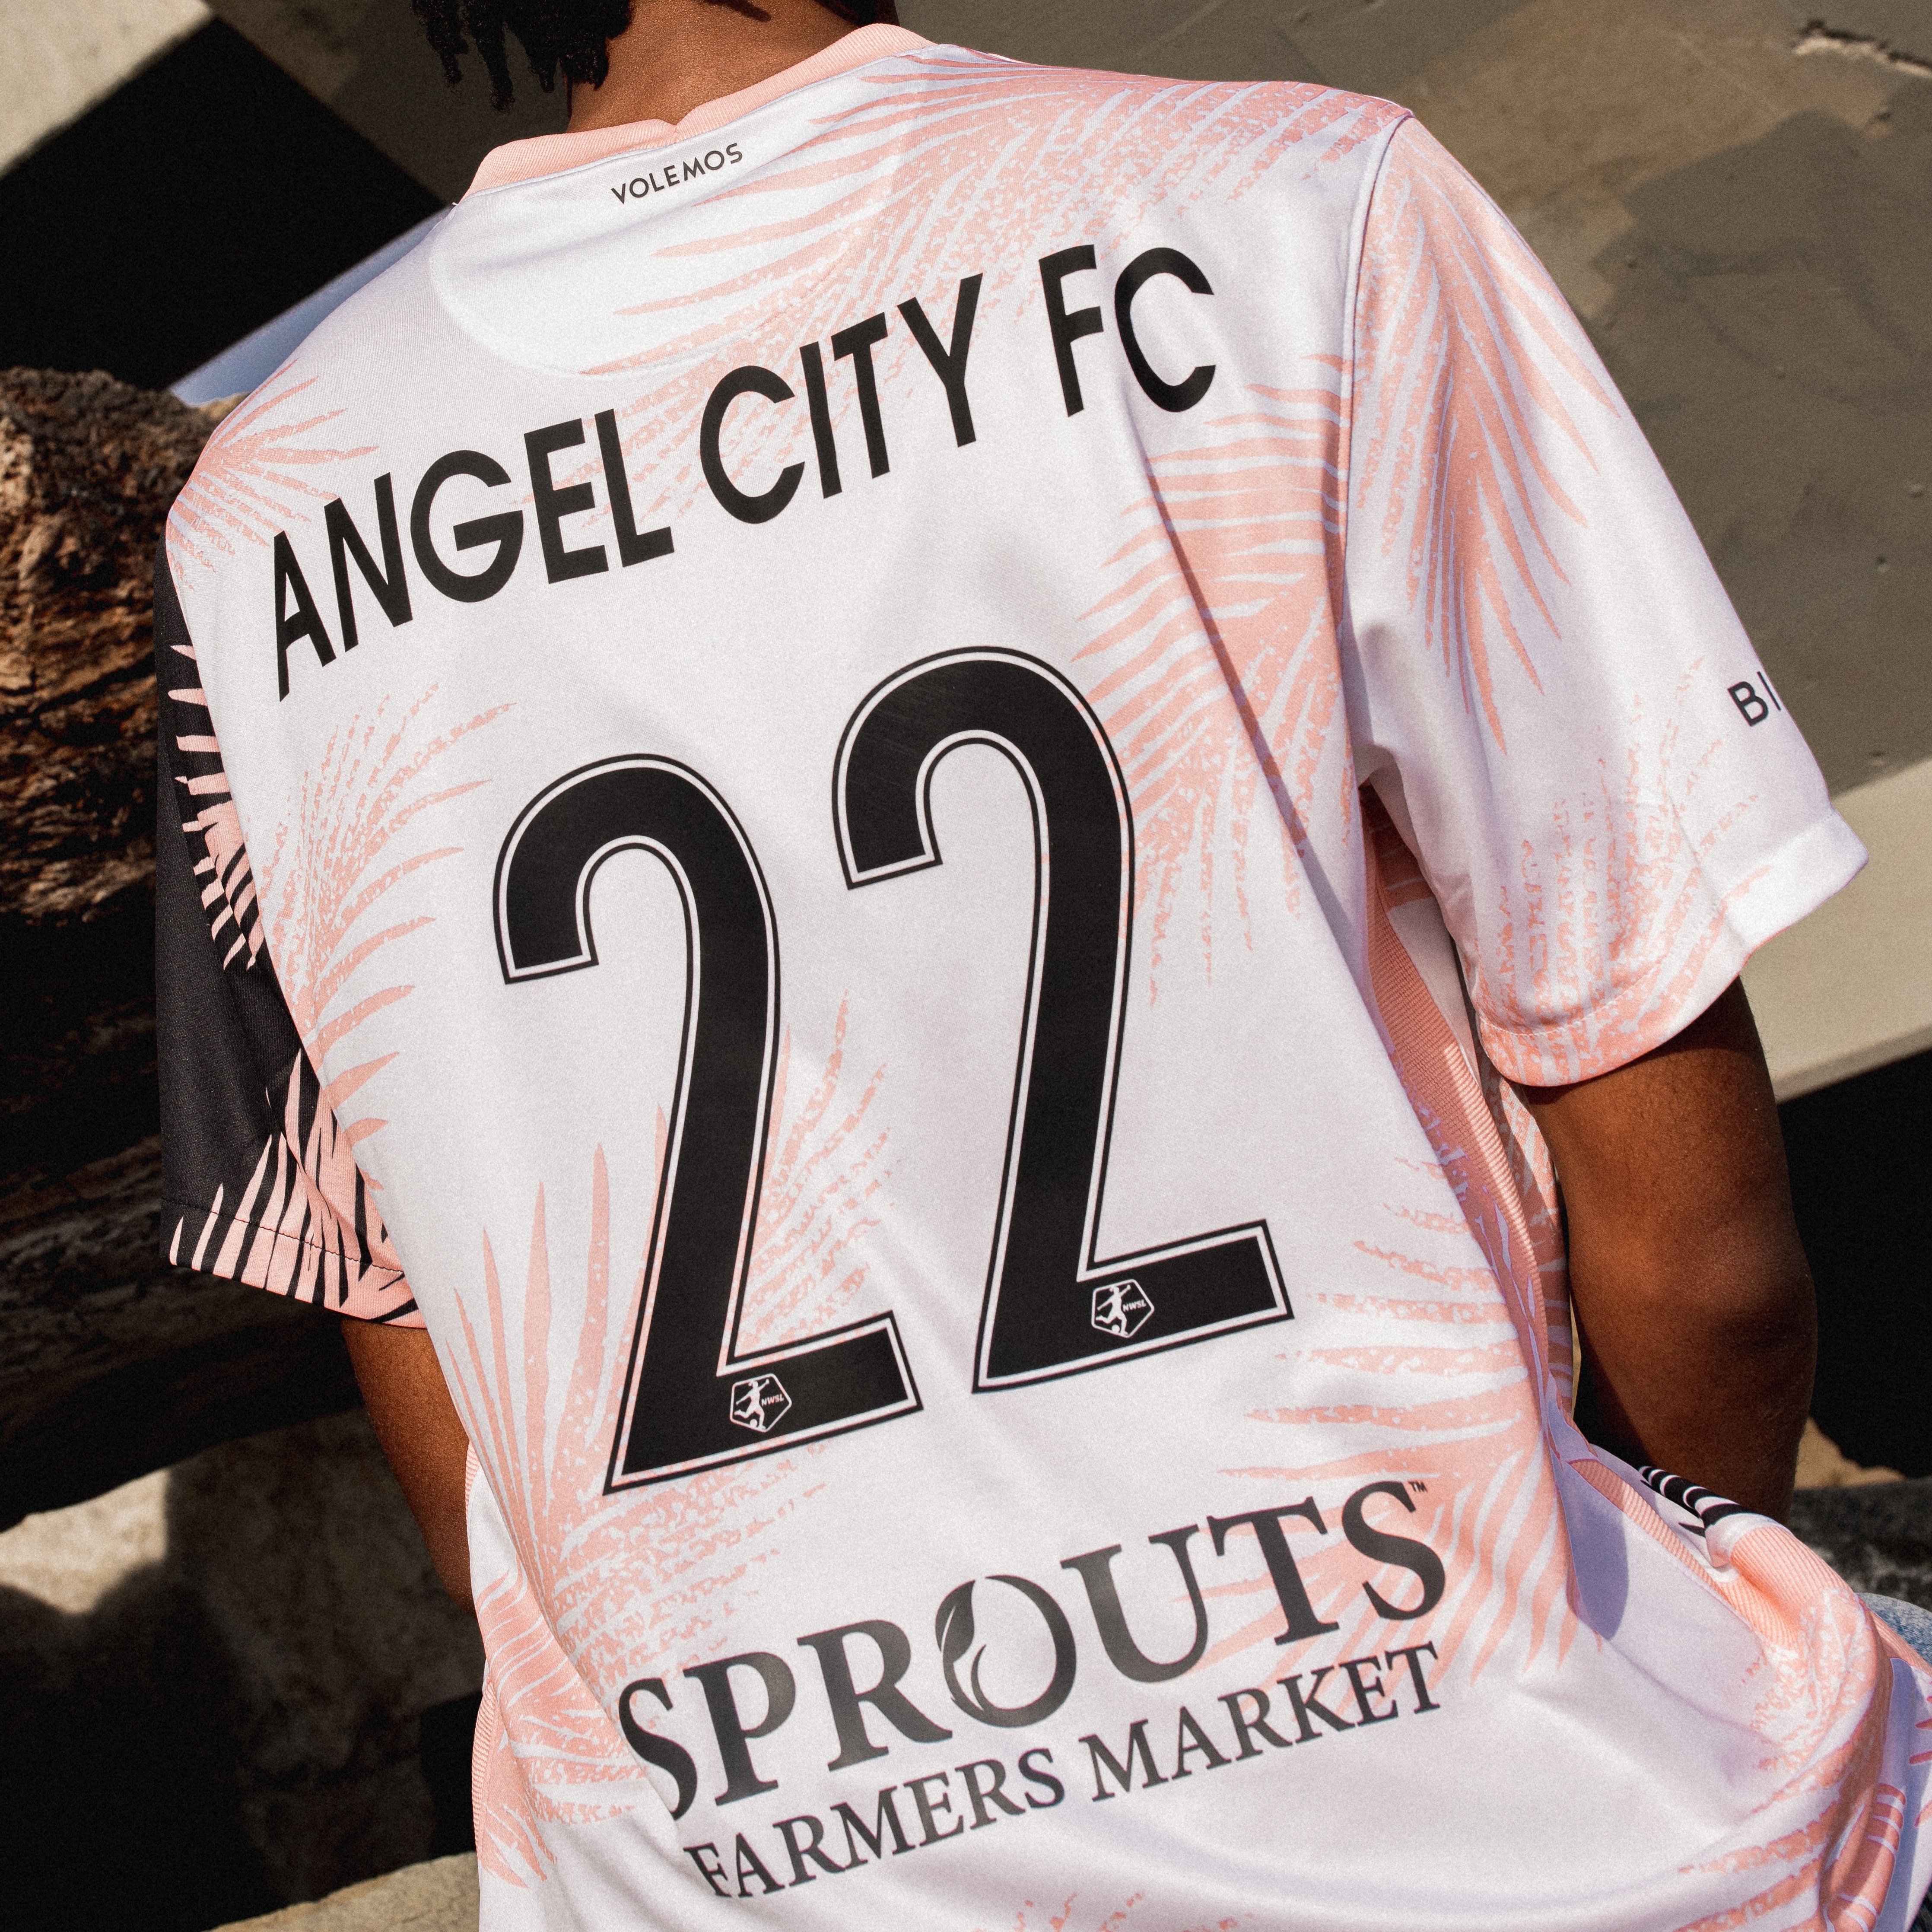 angel city fc jersey